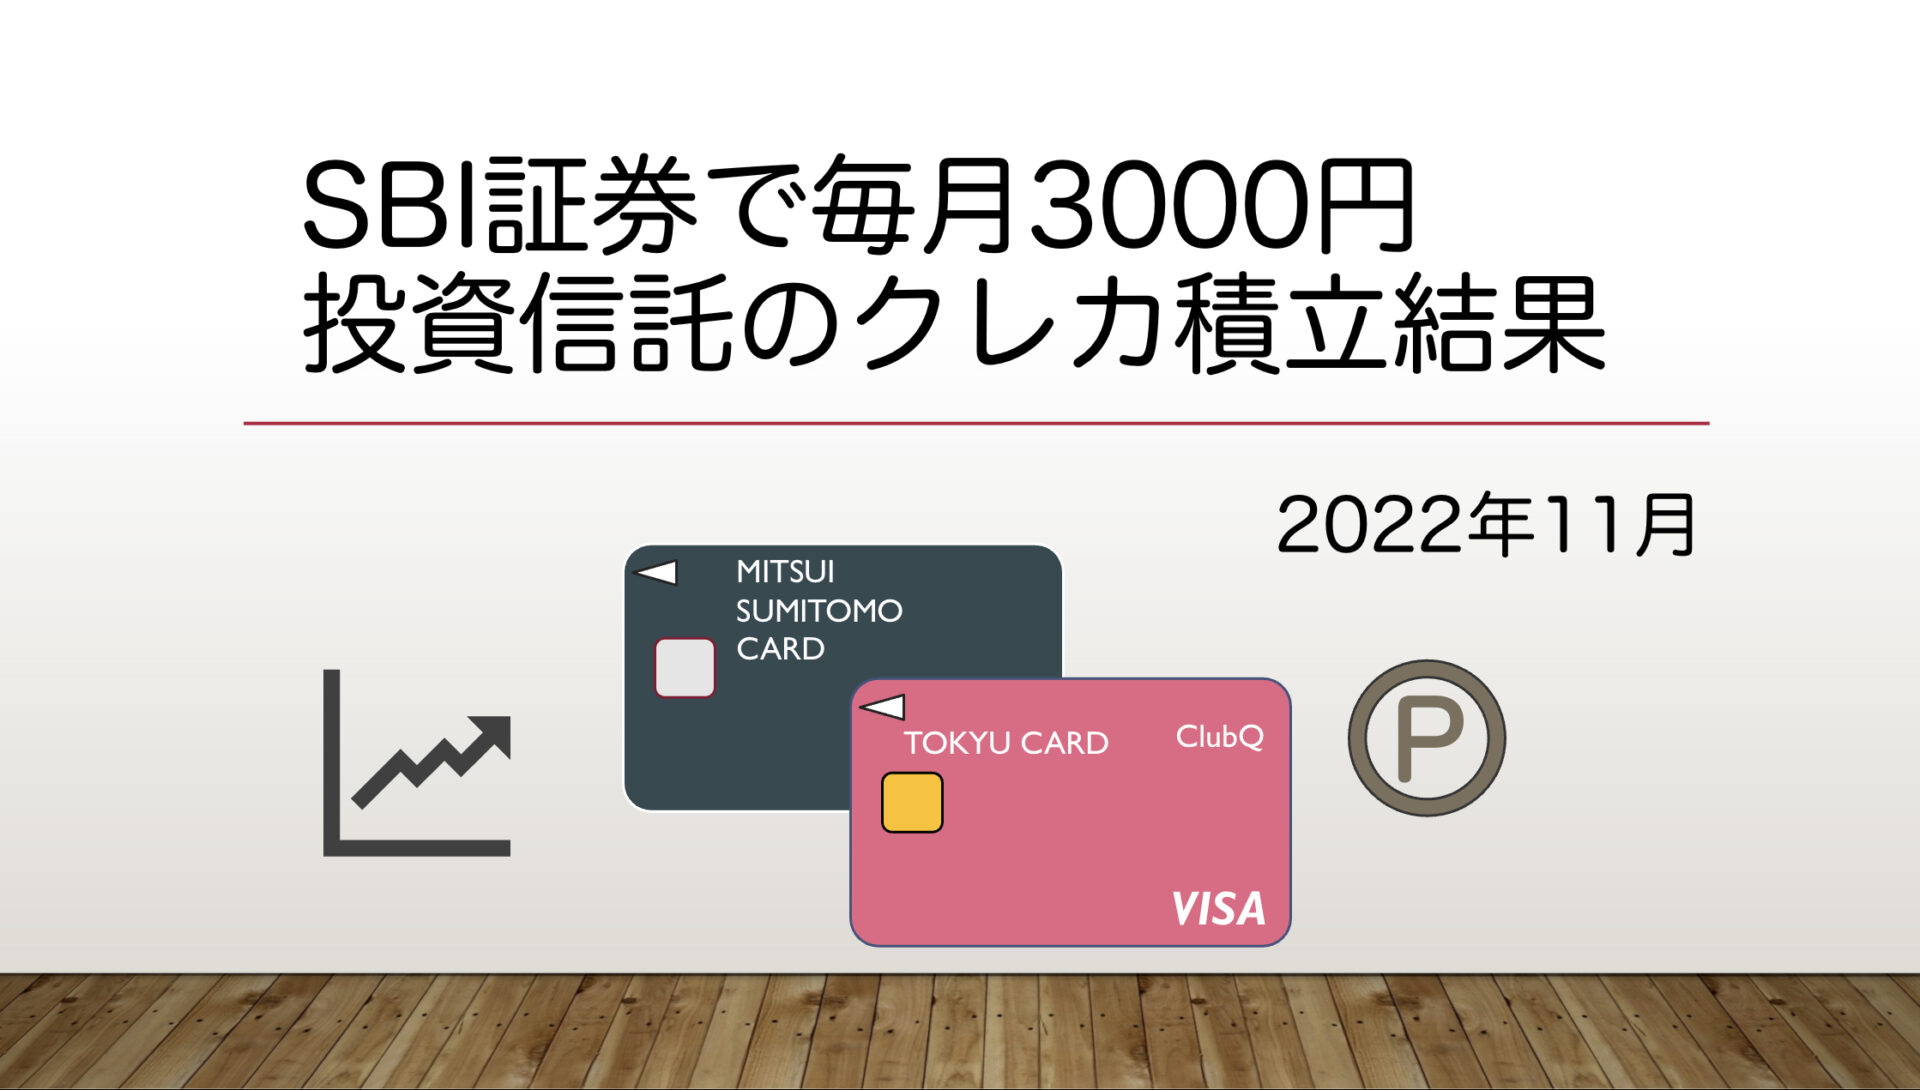 【SBI証券】三井住友カードによる投資信託のクレカ積立結果【2022年11月】